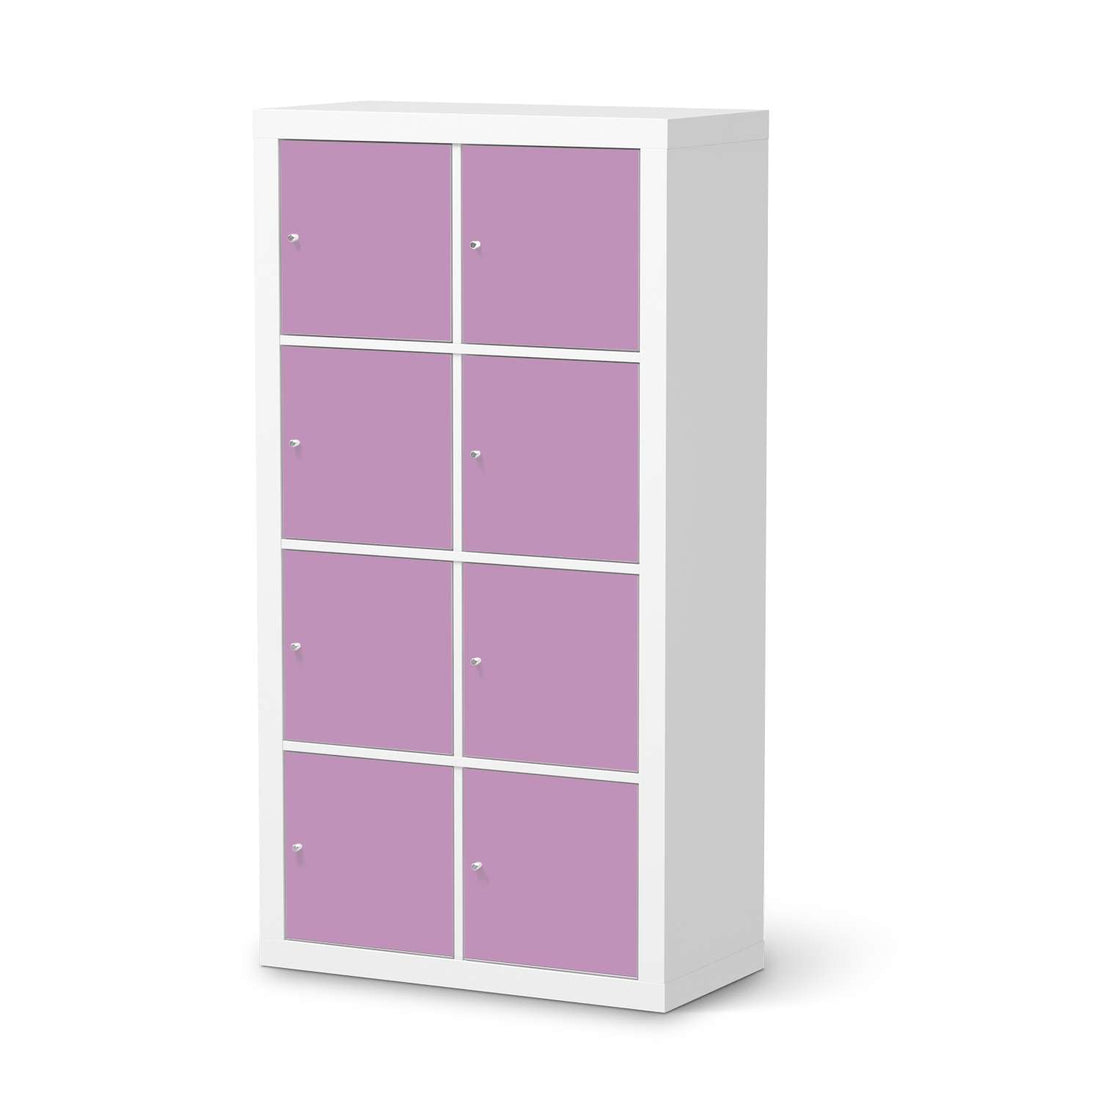 Folie für Möbel Flieder Light - IKEA Kallax Regal 8 Türen  - weiss